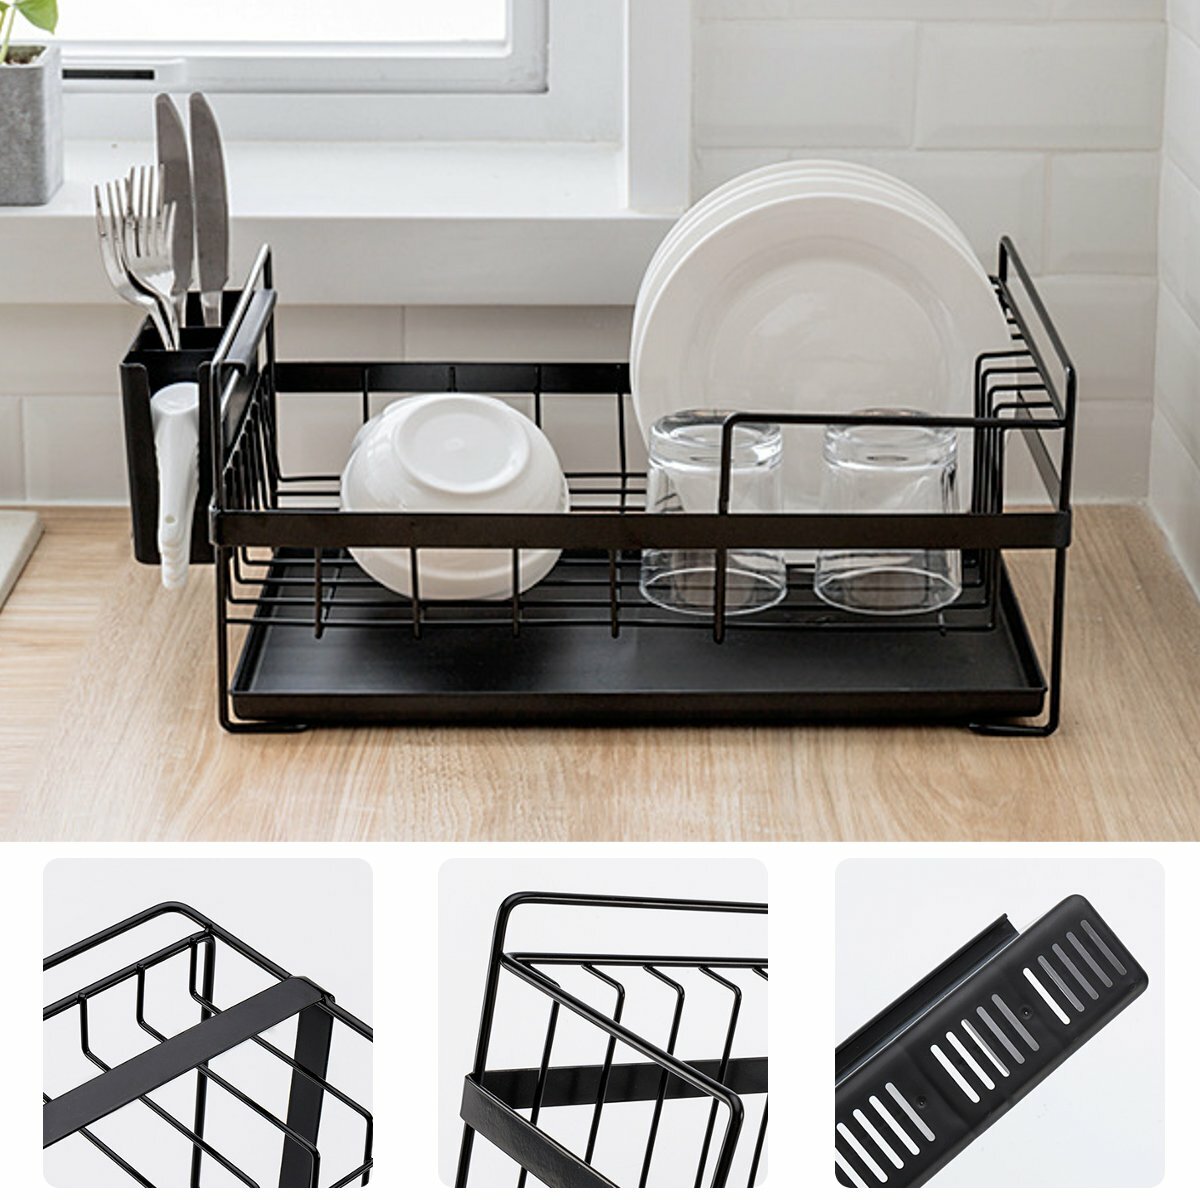 Multifunction Kitchen Storage Organizer Dish Drainer Drying Rack Iron Sink Holder Tray For Plate Cup Bowl Tableware Shelf Basket